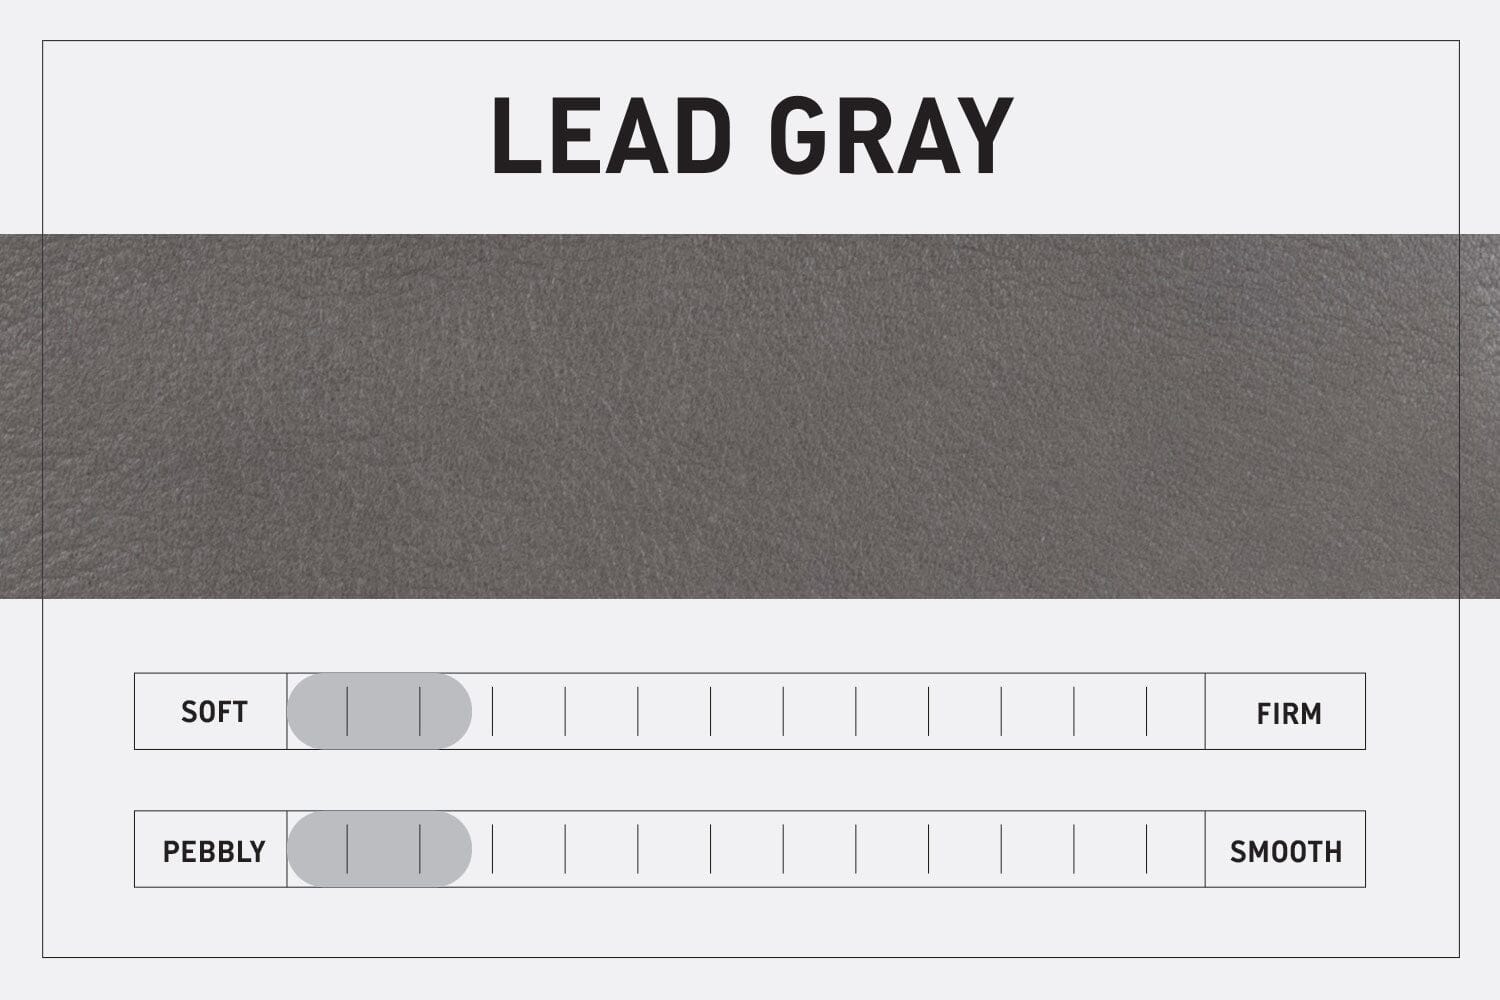 Celeste Leather Hobo Bag - Large - Lead Gray